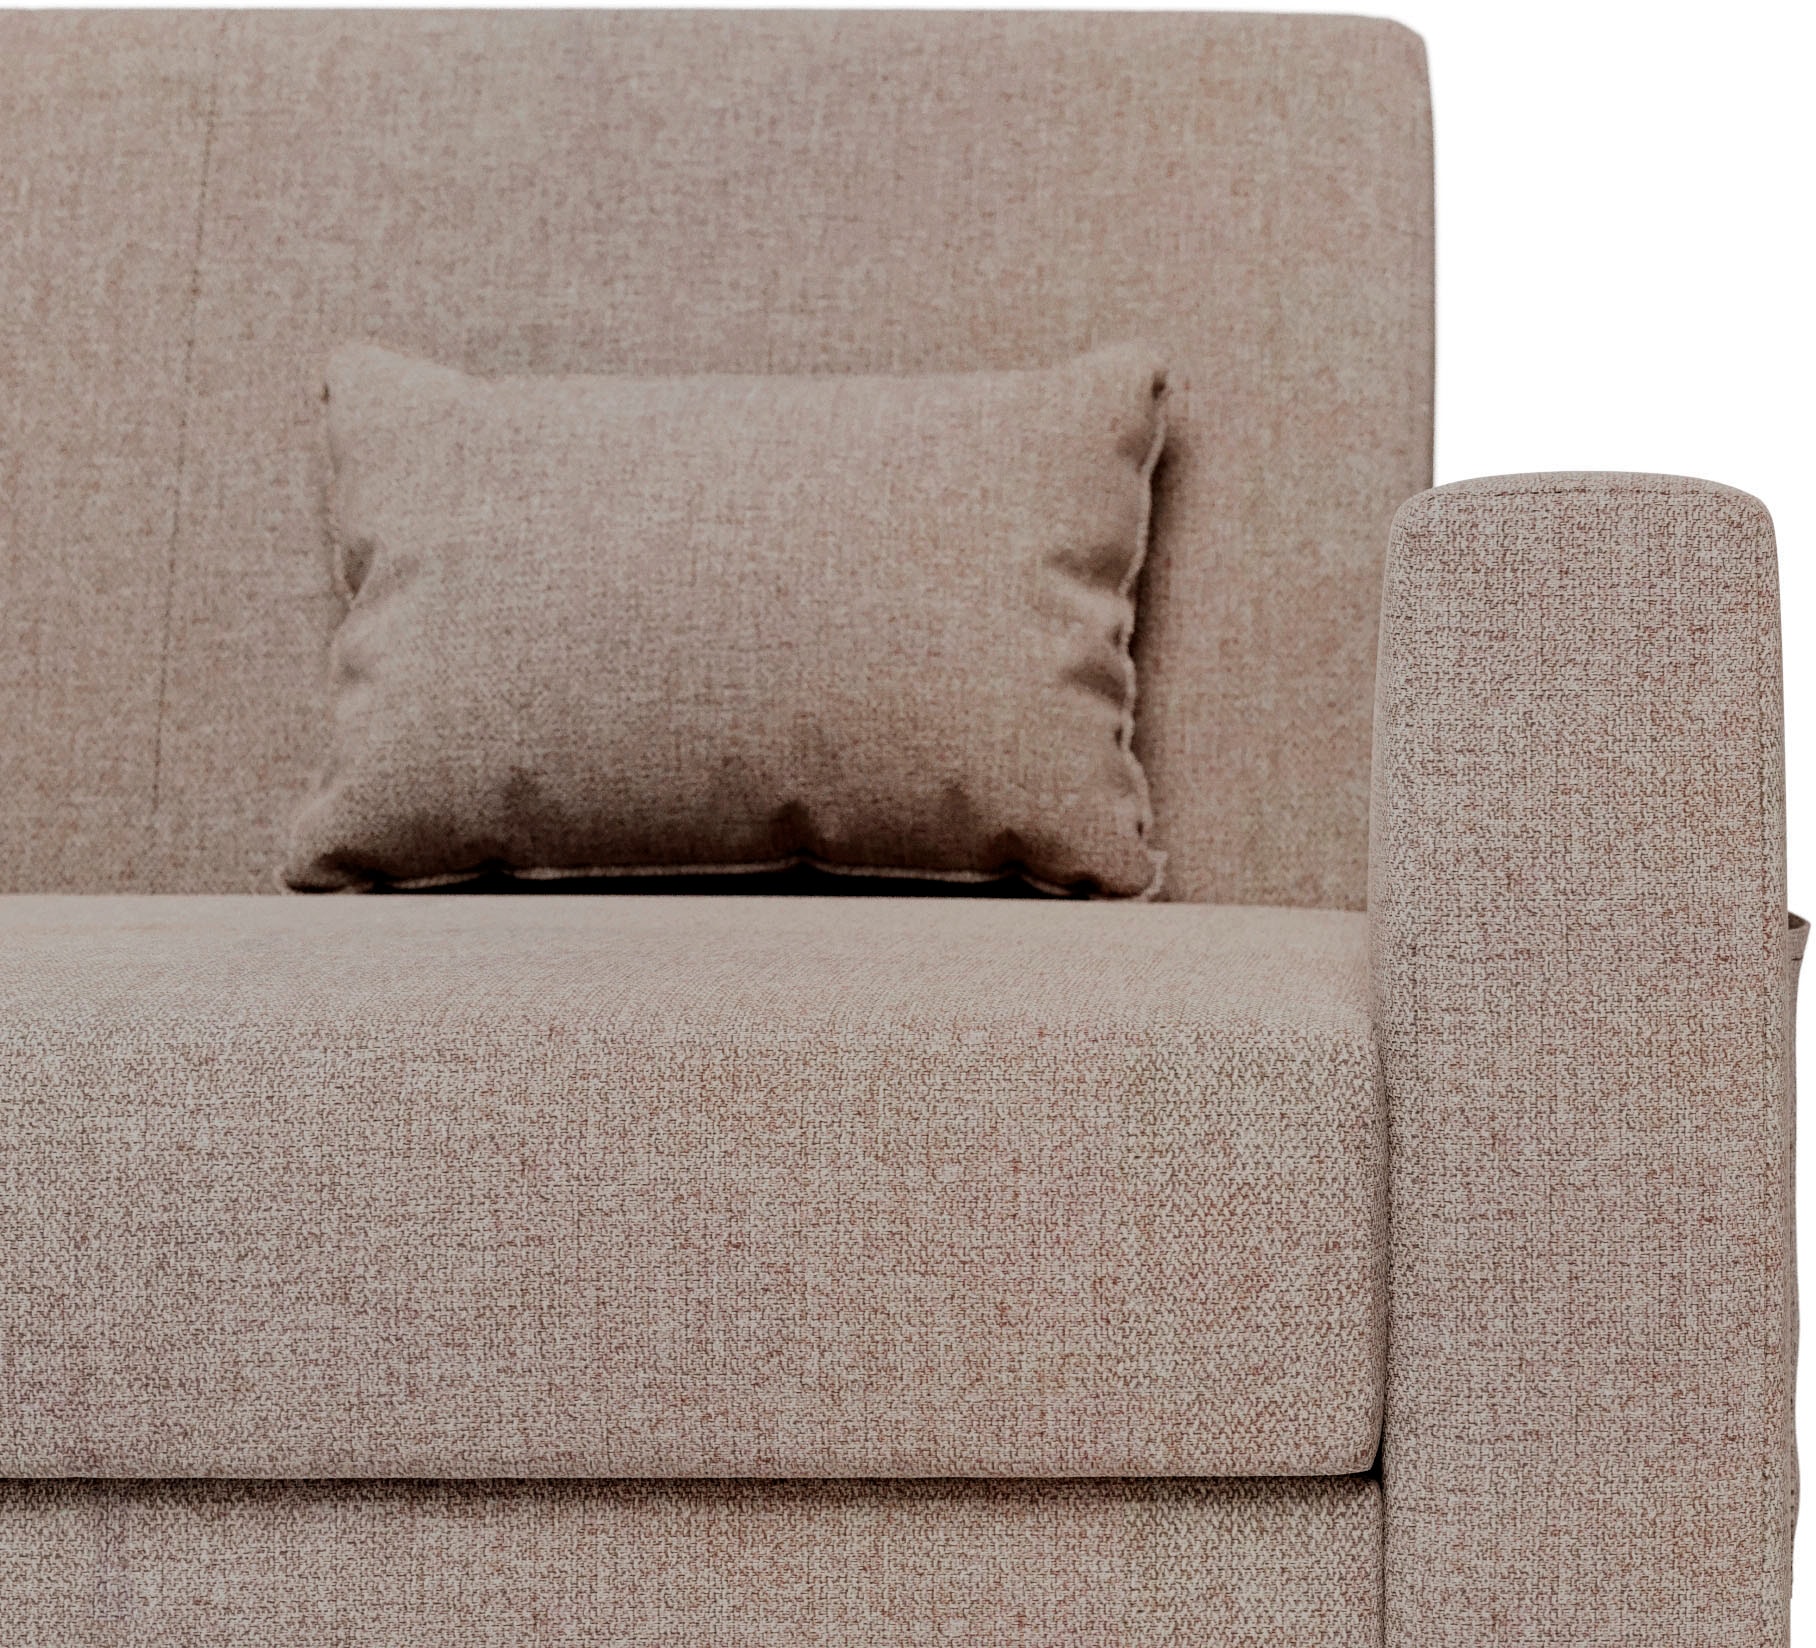 INOSIGN Schlafsofa »Ravena Breite 146 cm, mit Bettfunktion«, kompaktes 2-Sitzer Sofa, Breitcord, Webstoff